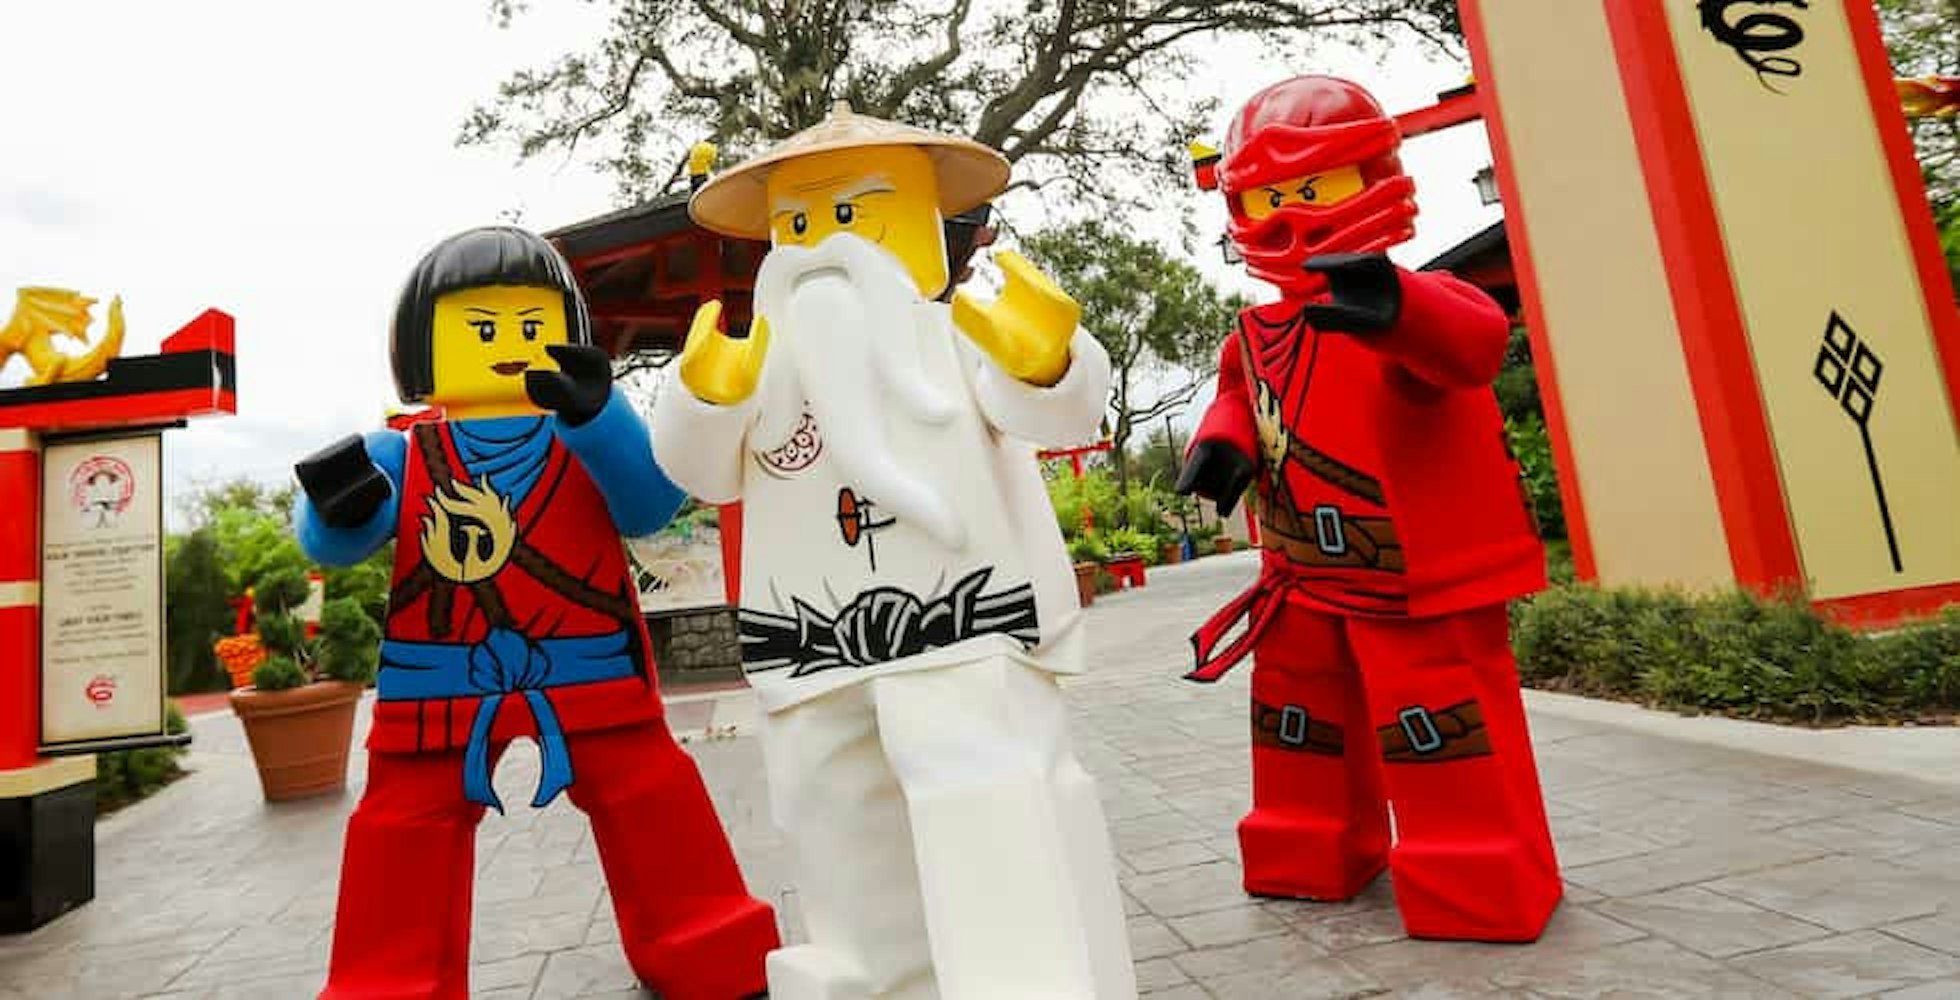 Cover Image for “LEGO Ninjago Days” Hits LEGOLAND Florida